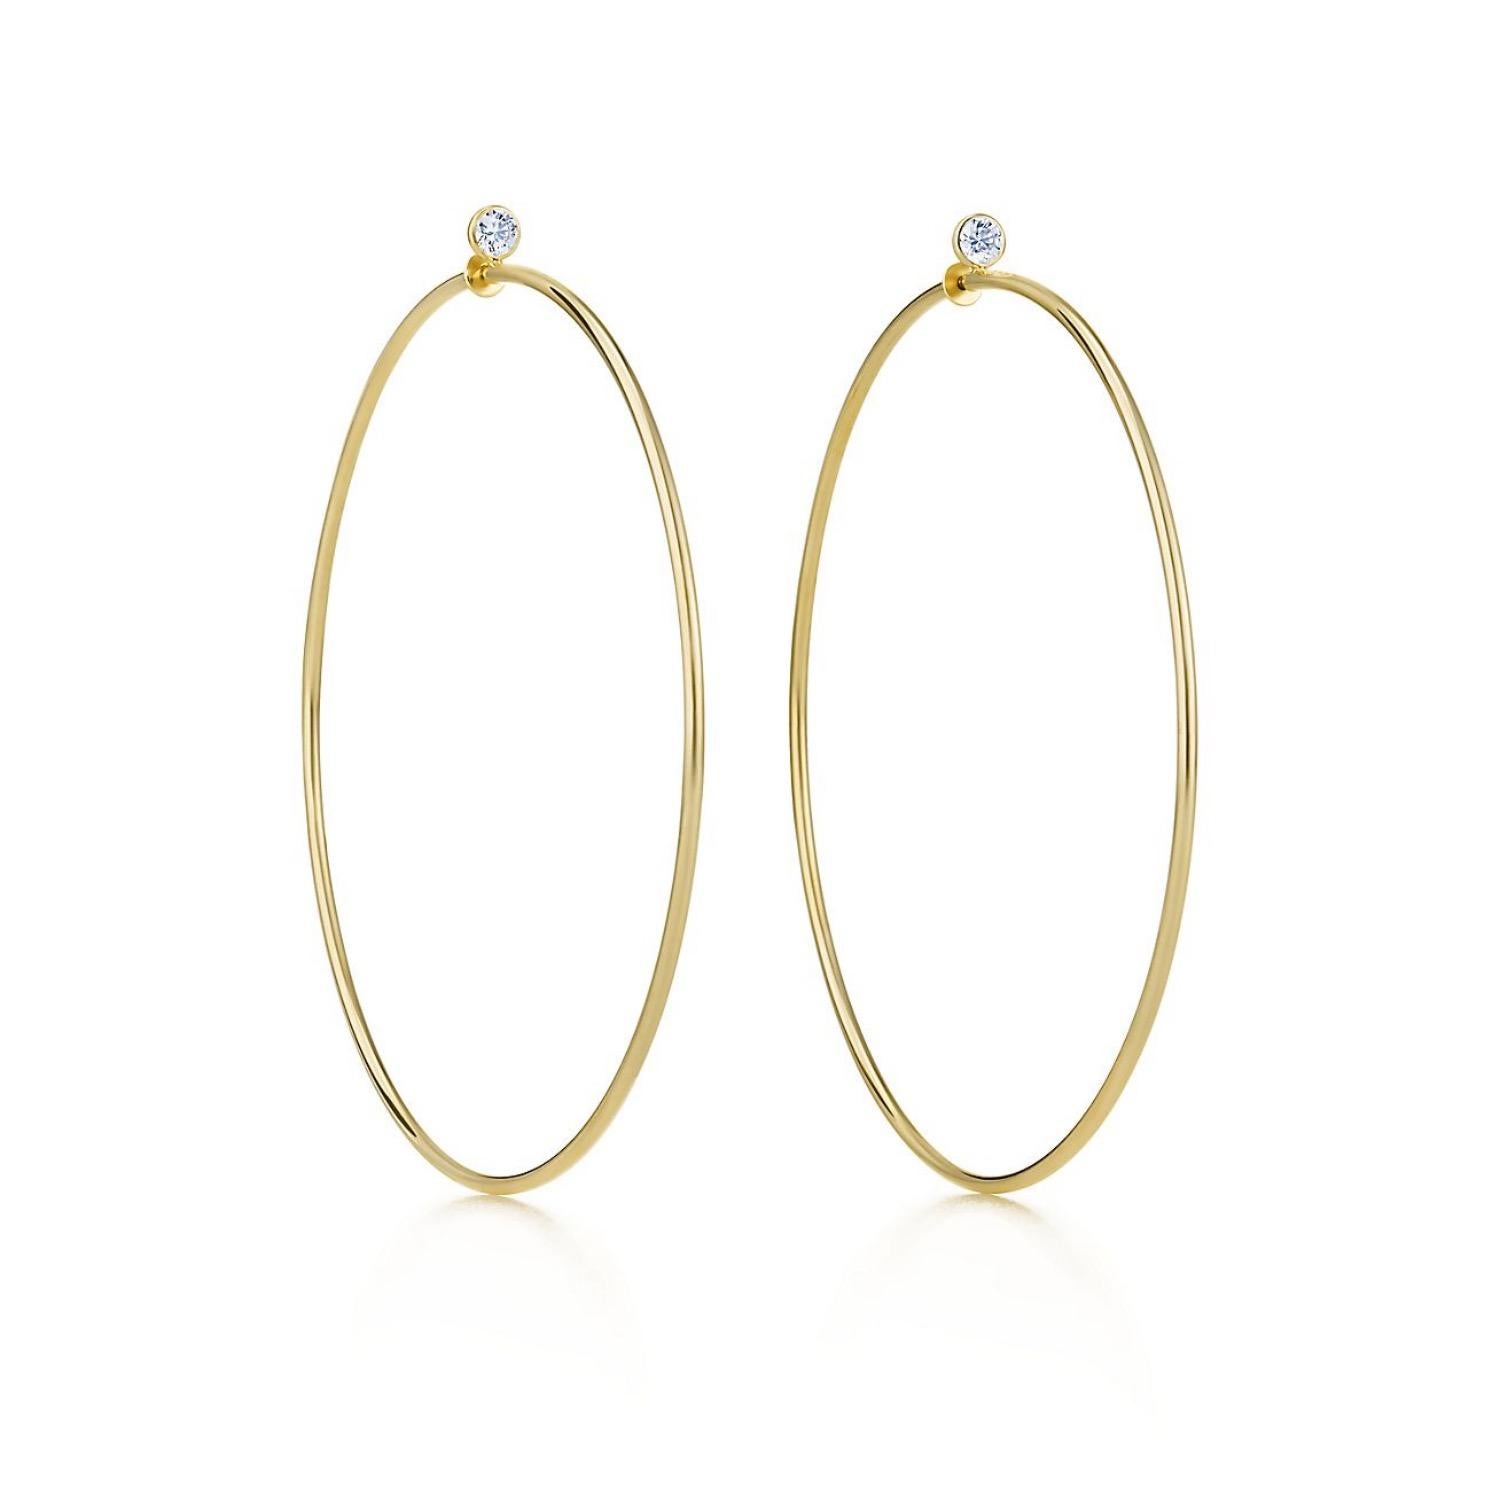 Round Cut Tiffany & Co. Elsa Peretti Diamond Hoop Earrings in 18kt Yellow Gold Size Large